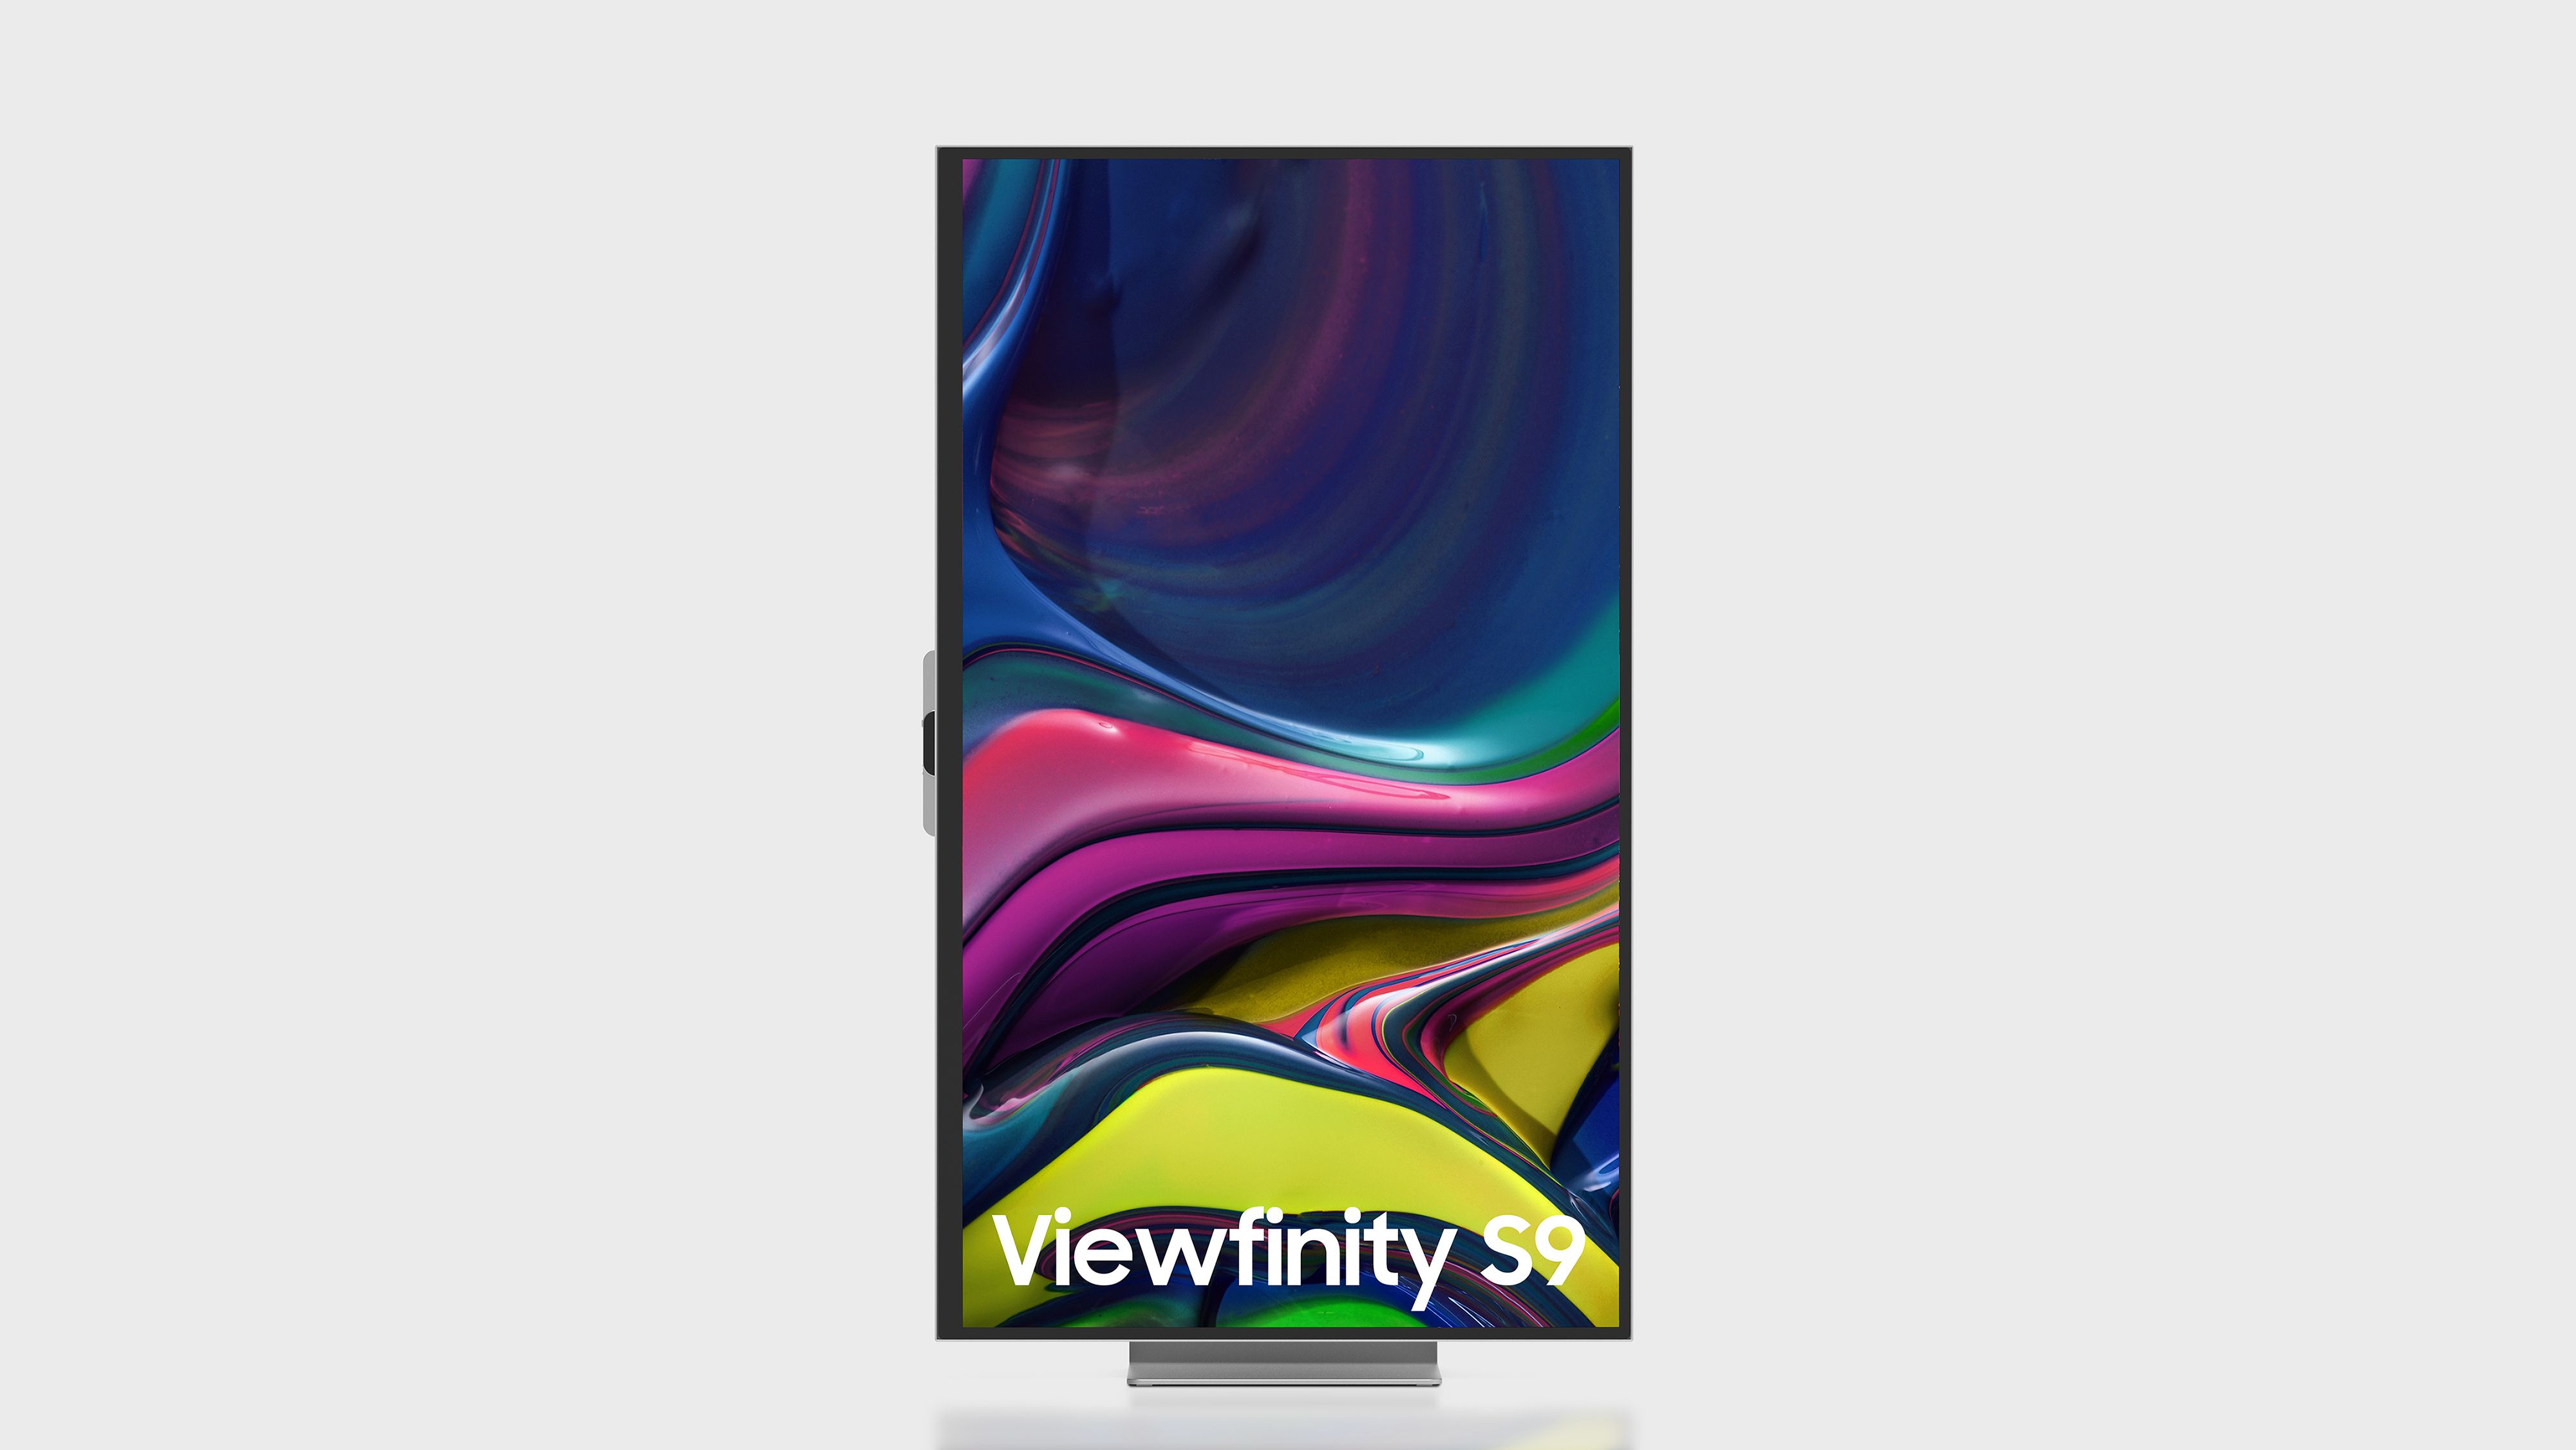 Samsung ViewFinity S9 Portrait Display.